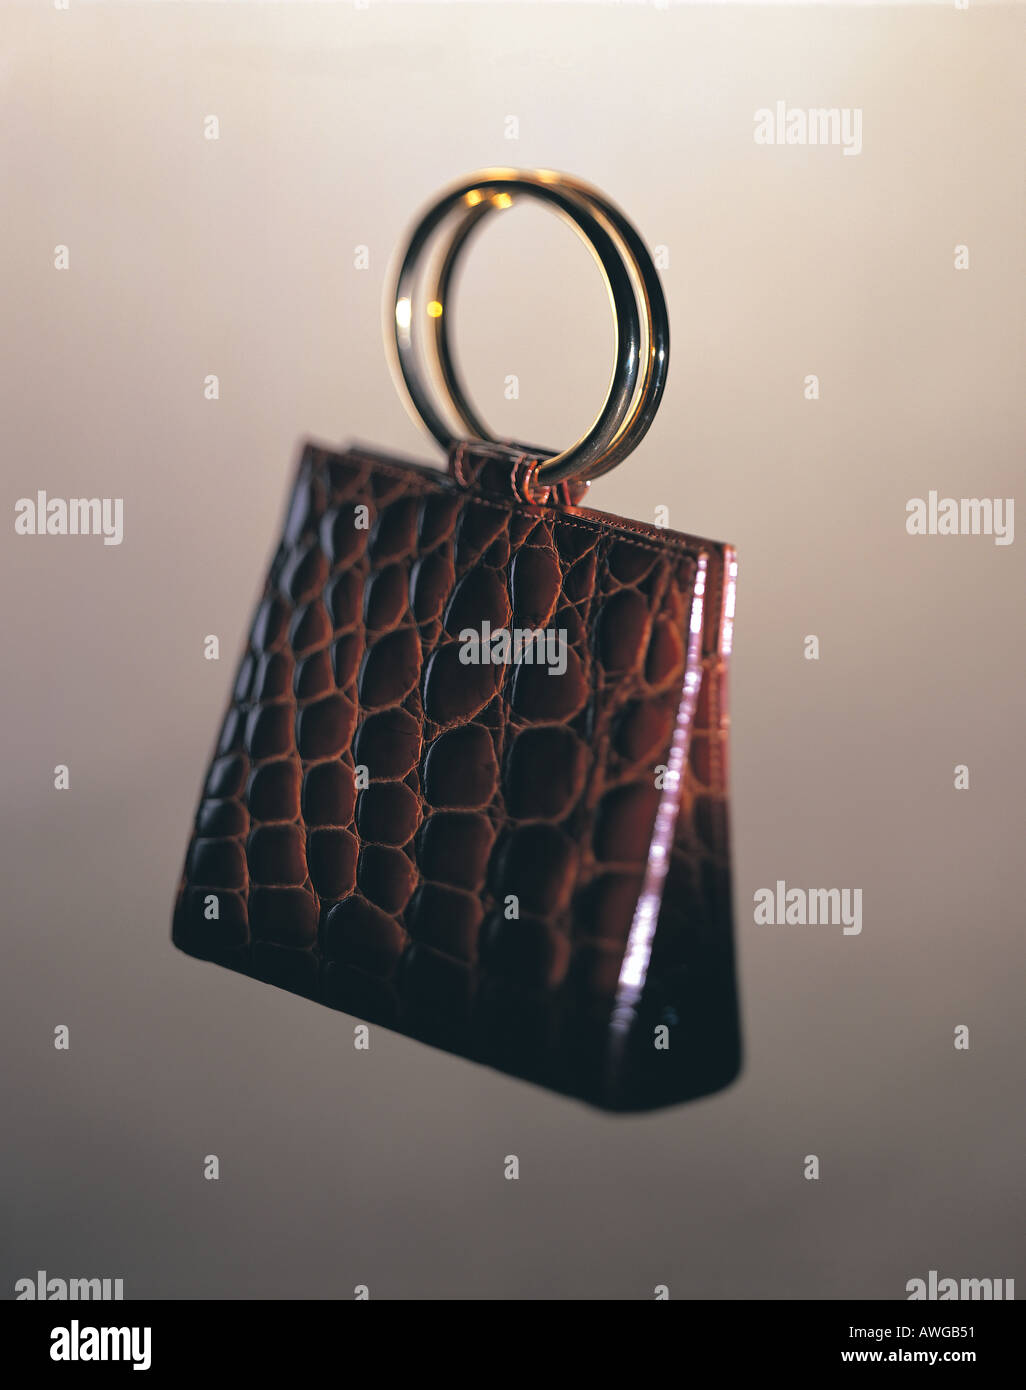 A leather handbag Stock Photo